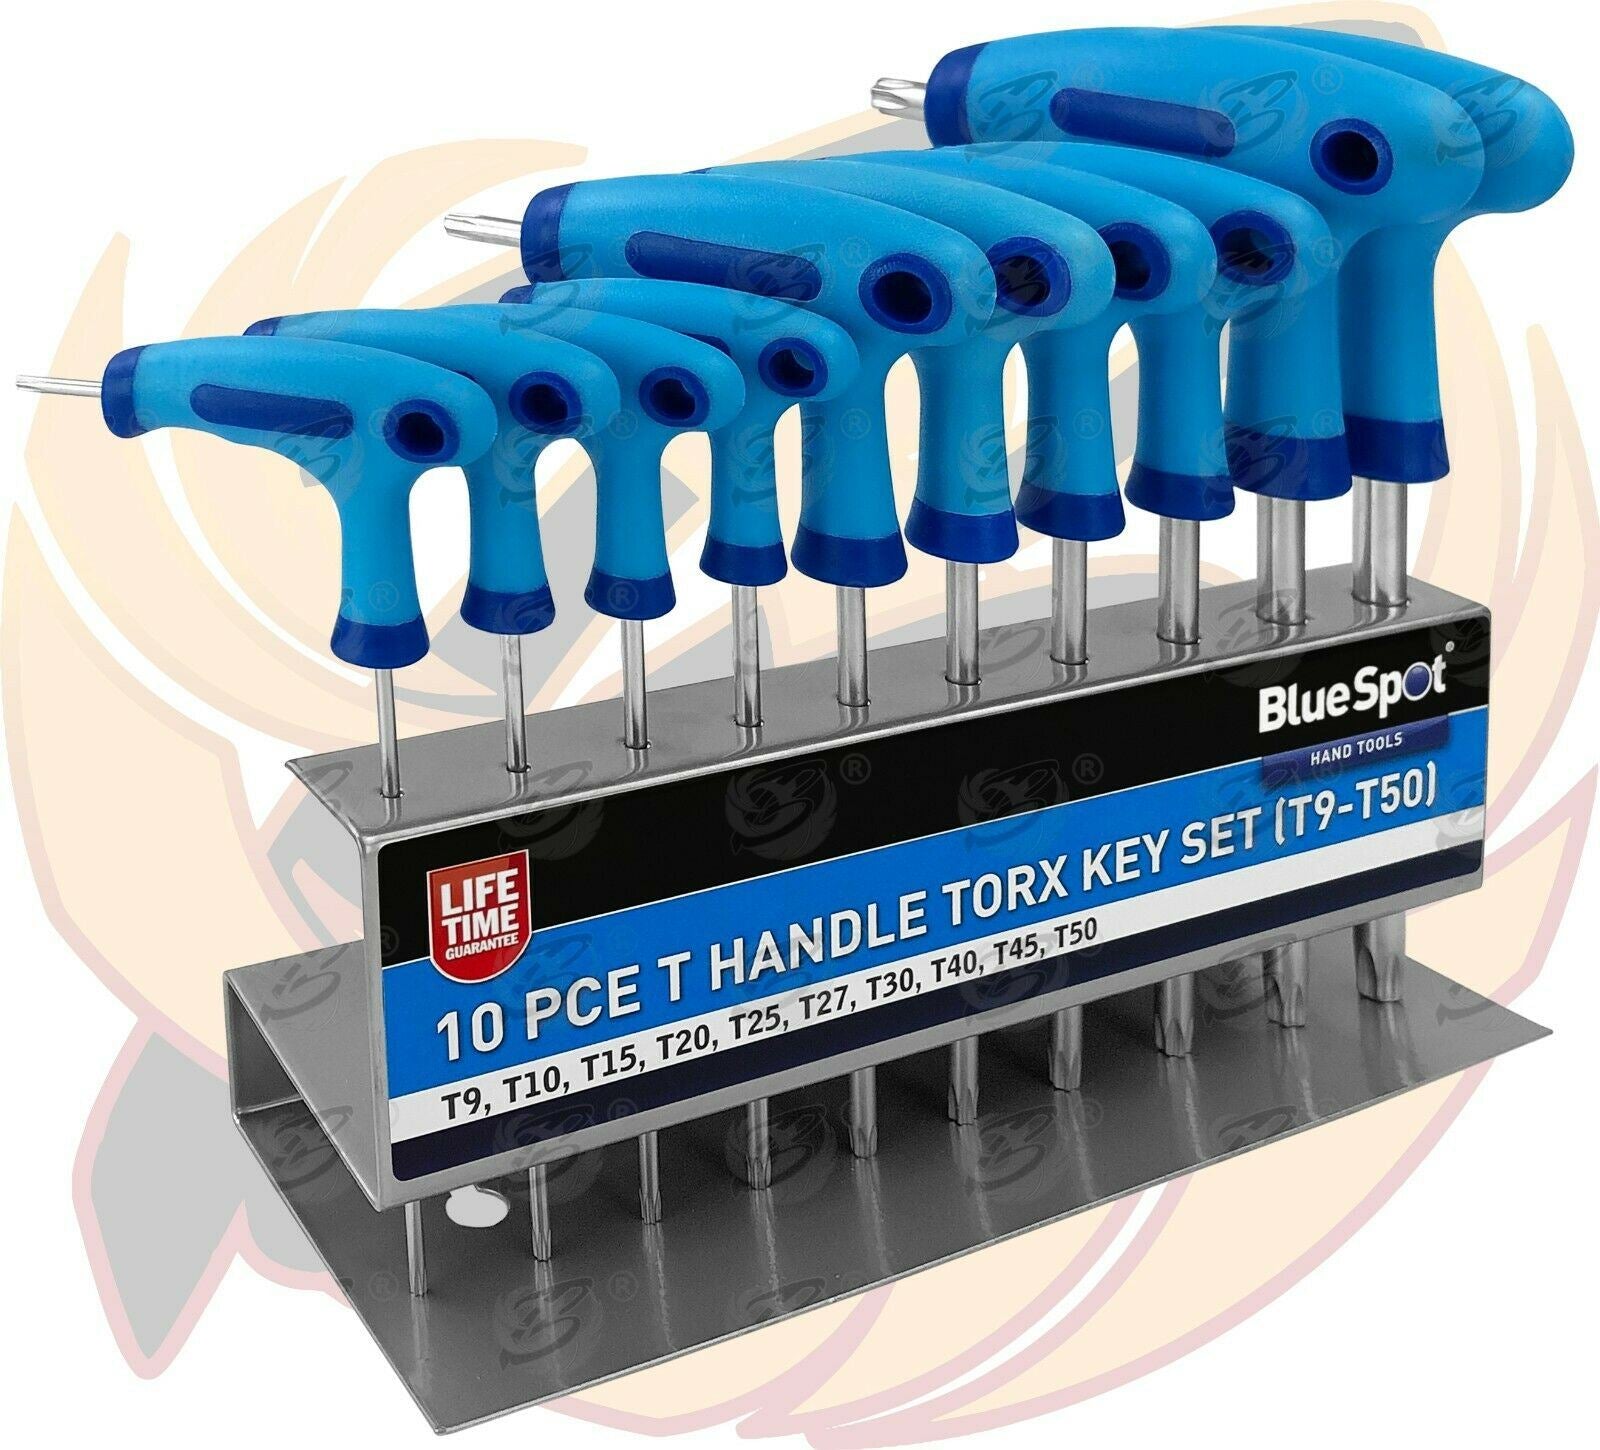 BLUESPOT 10PCS T HANDLE TORX KEY SET T9 - T50